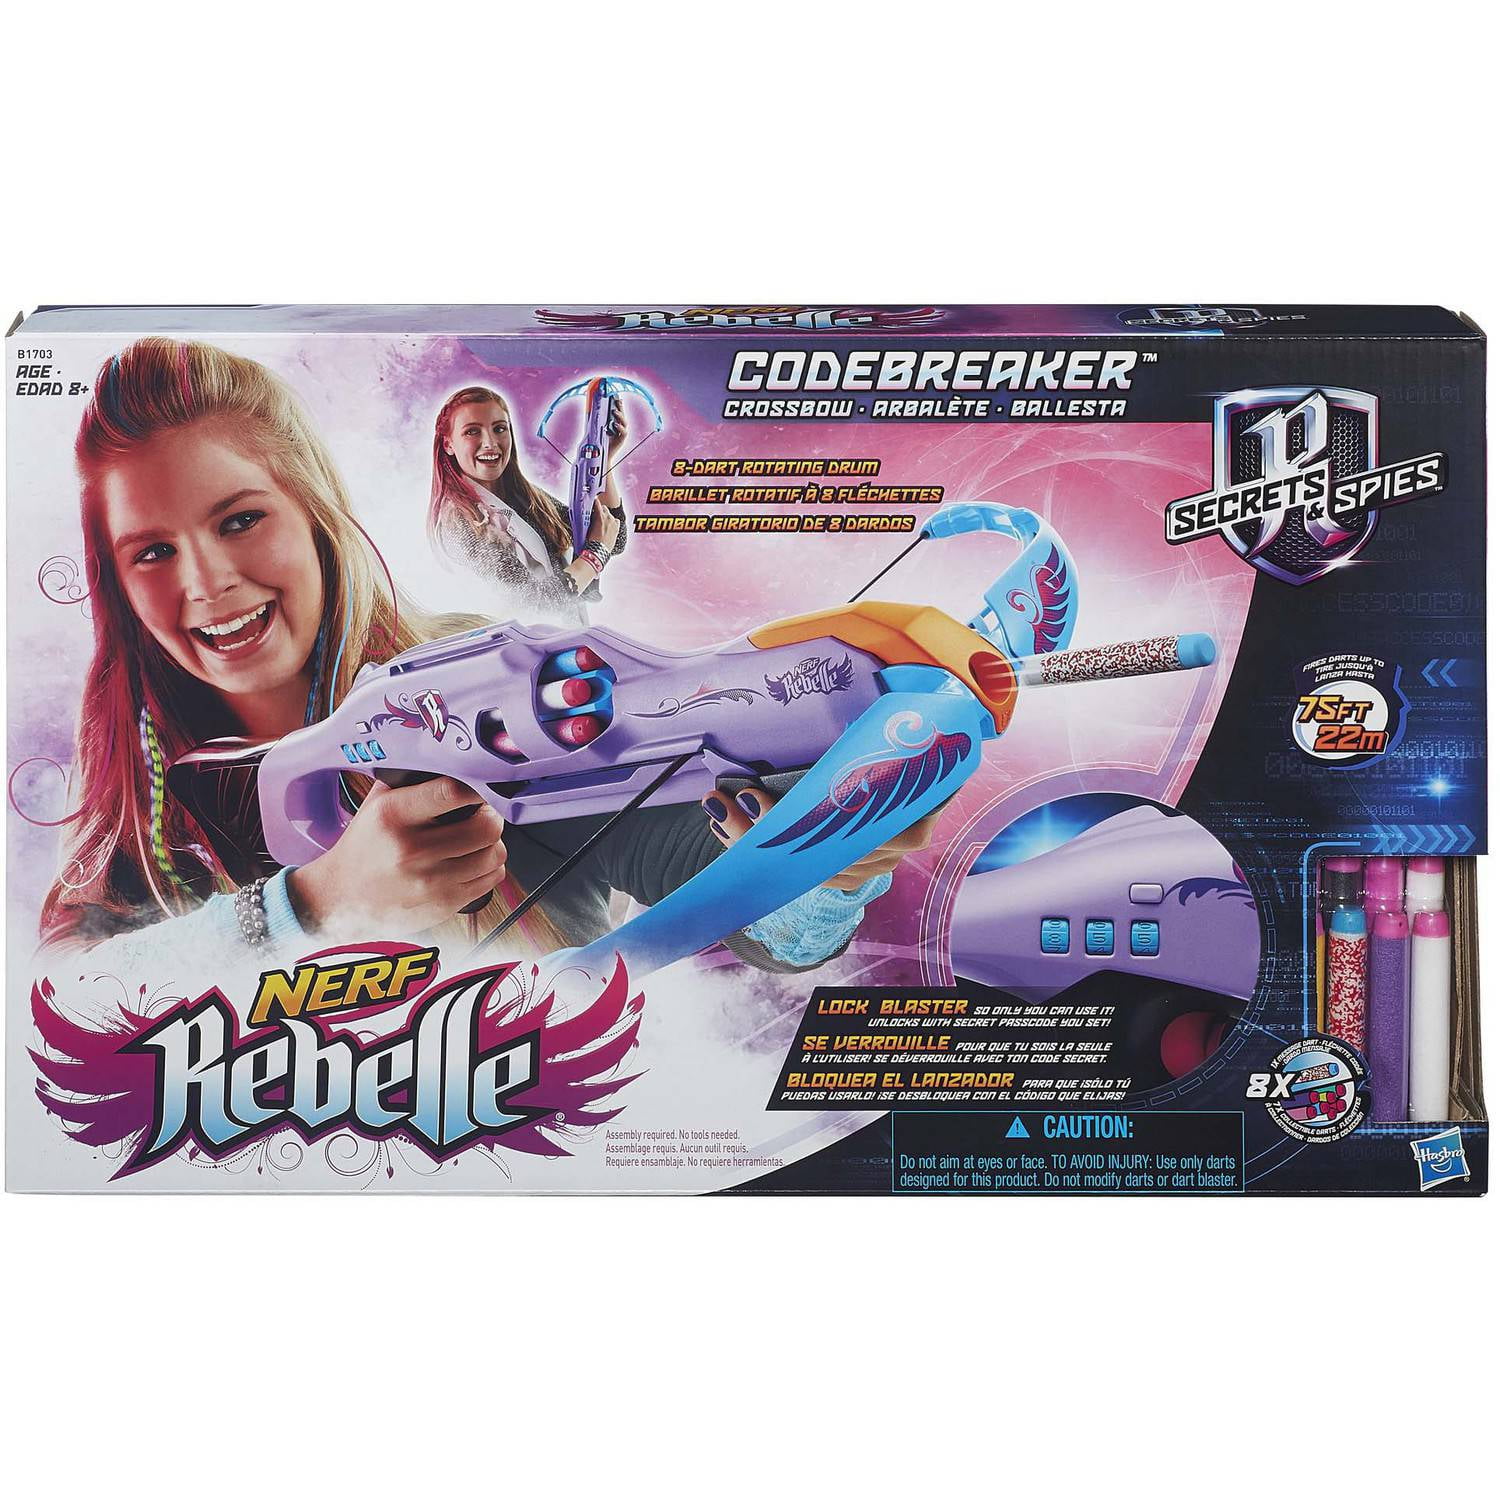 Rebelle Codebreaker Crossbow Blaster - Walmart.com